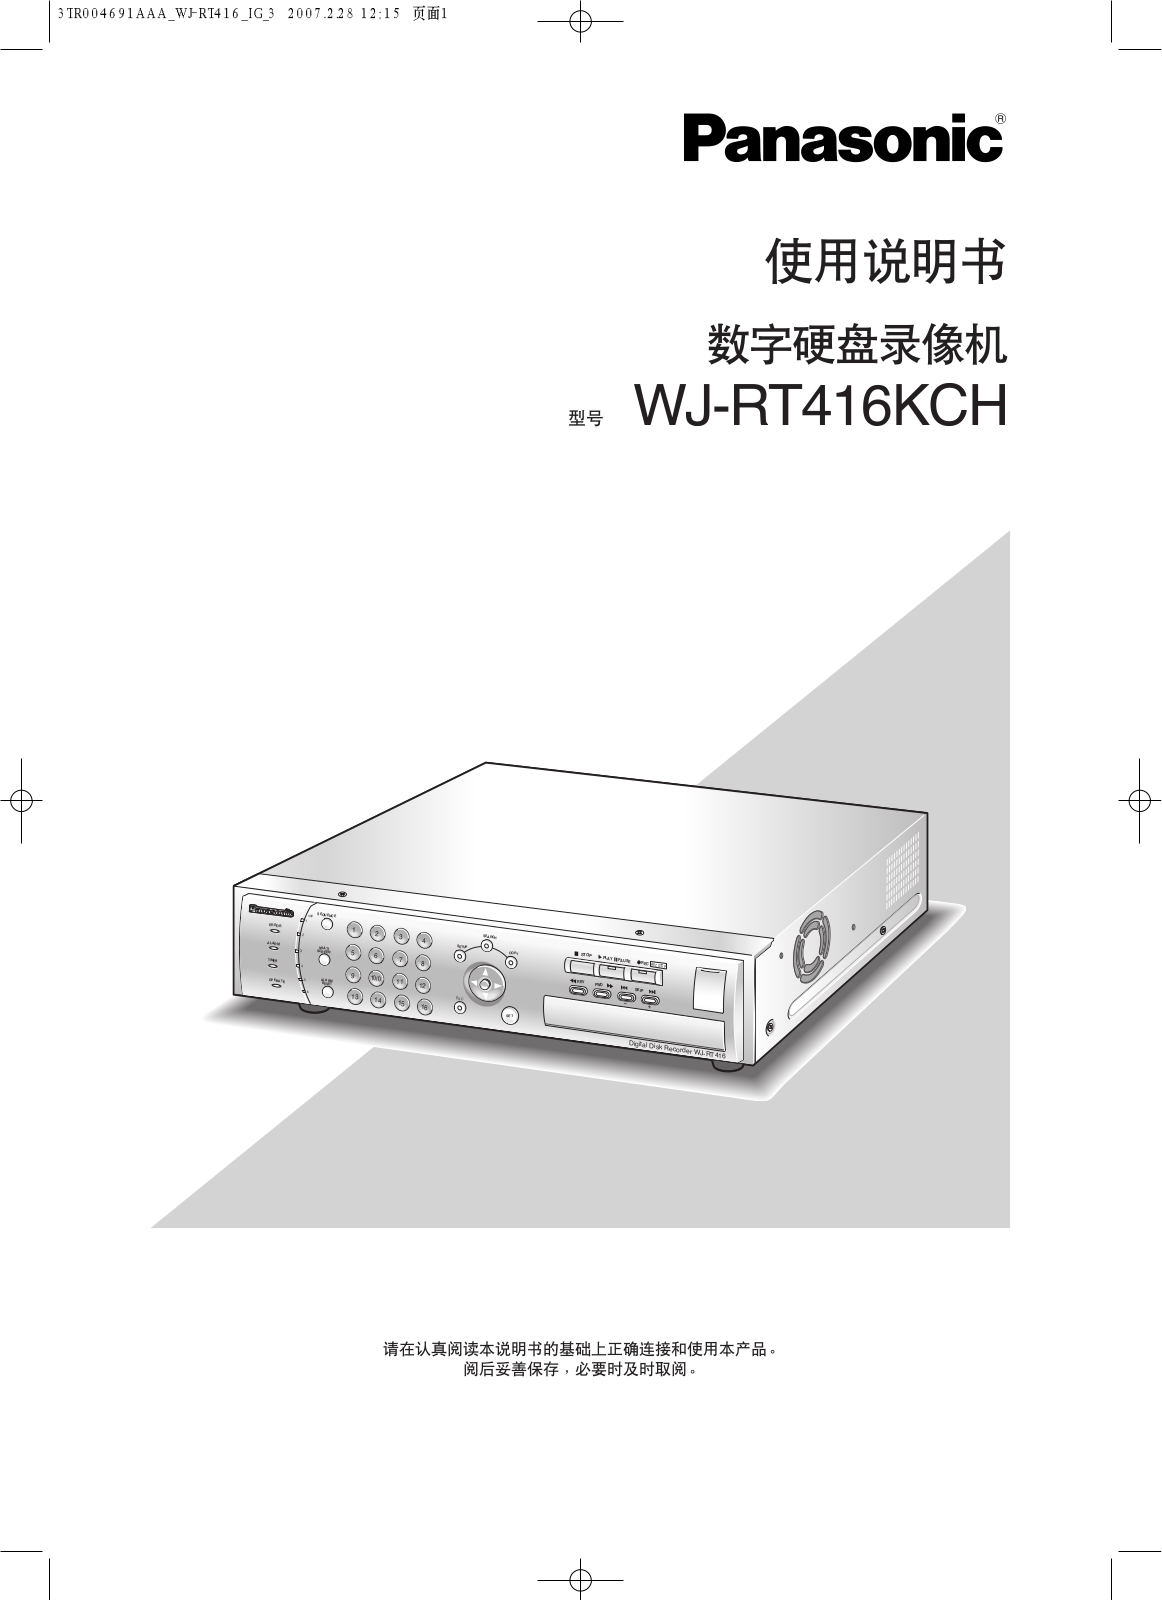 Panasonic WJ-RT416KCH User Manual